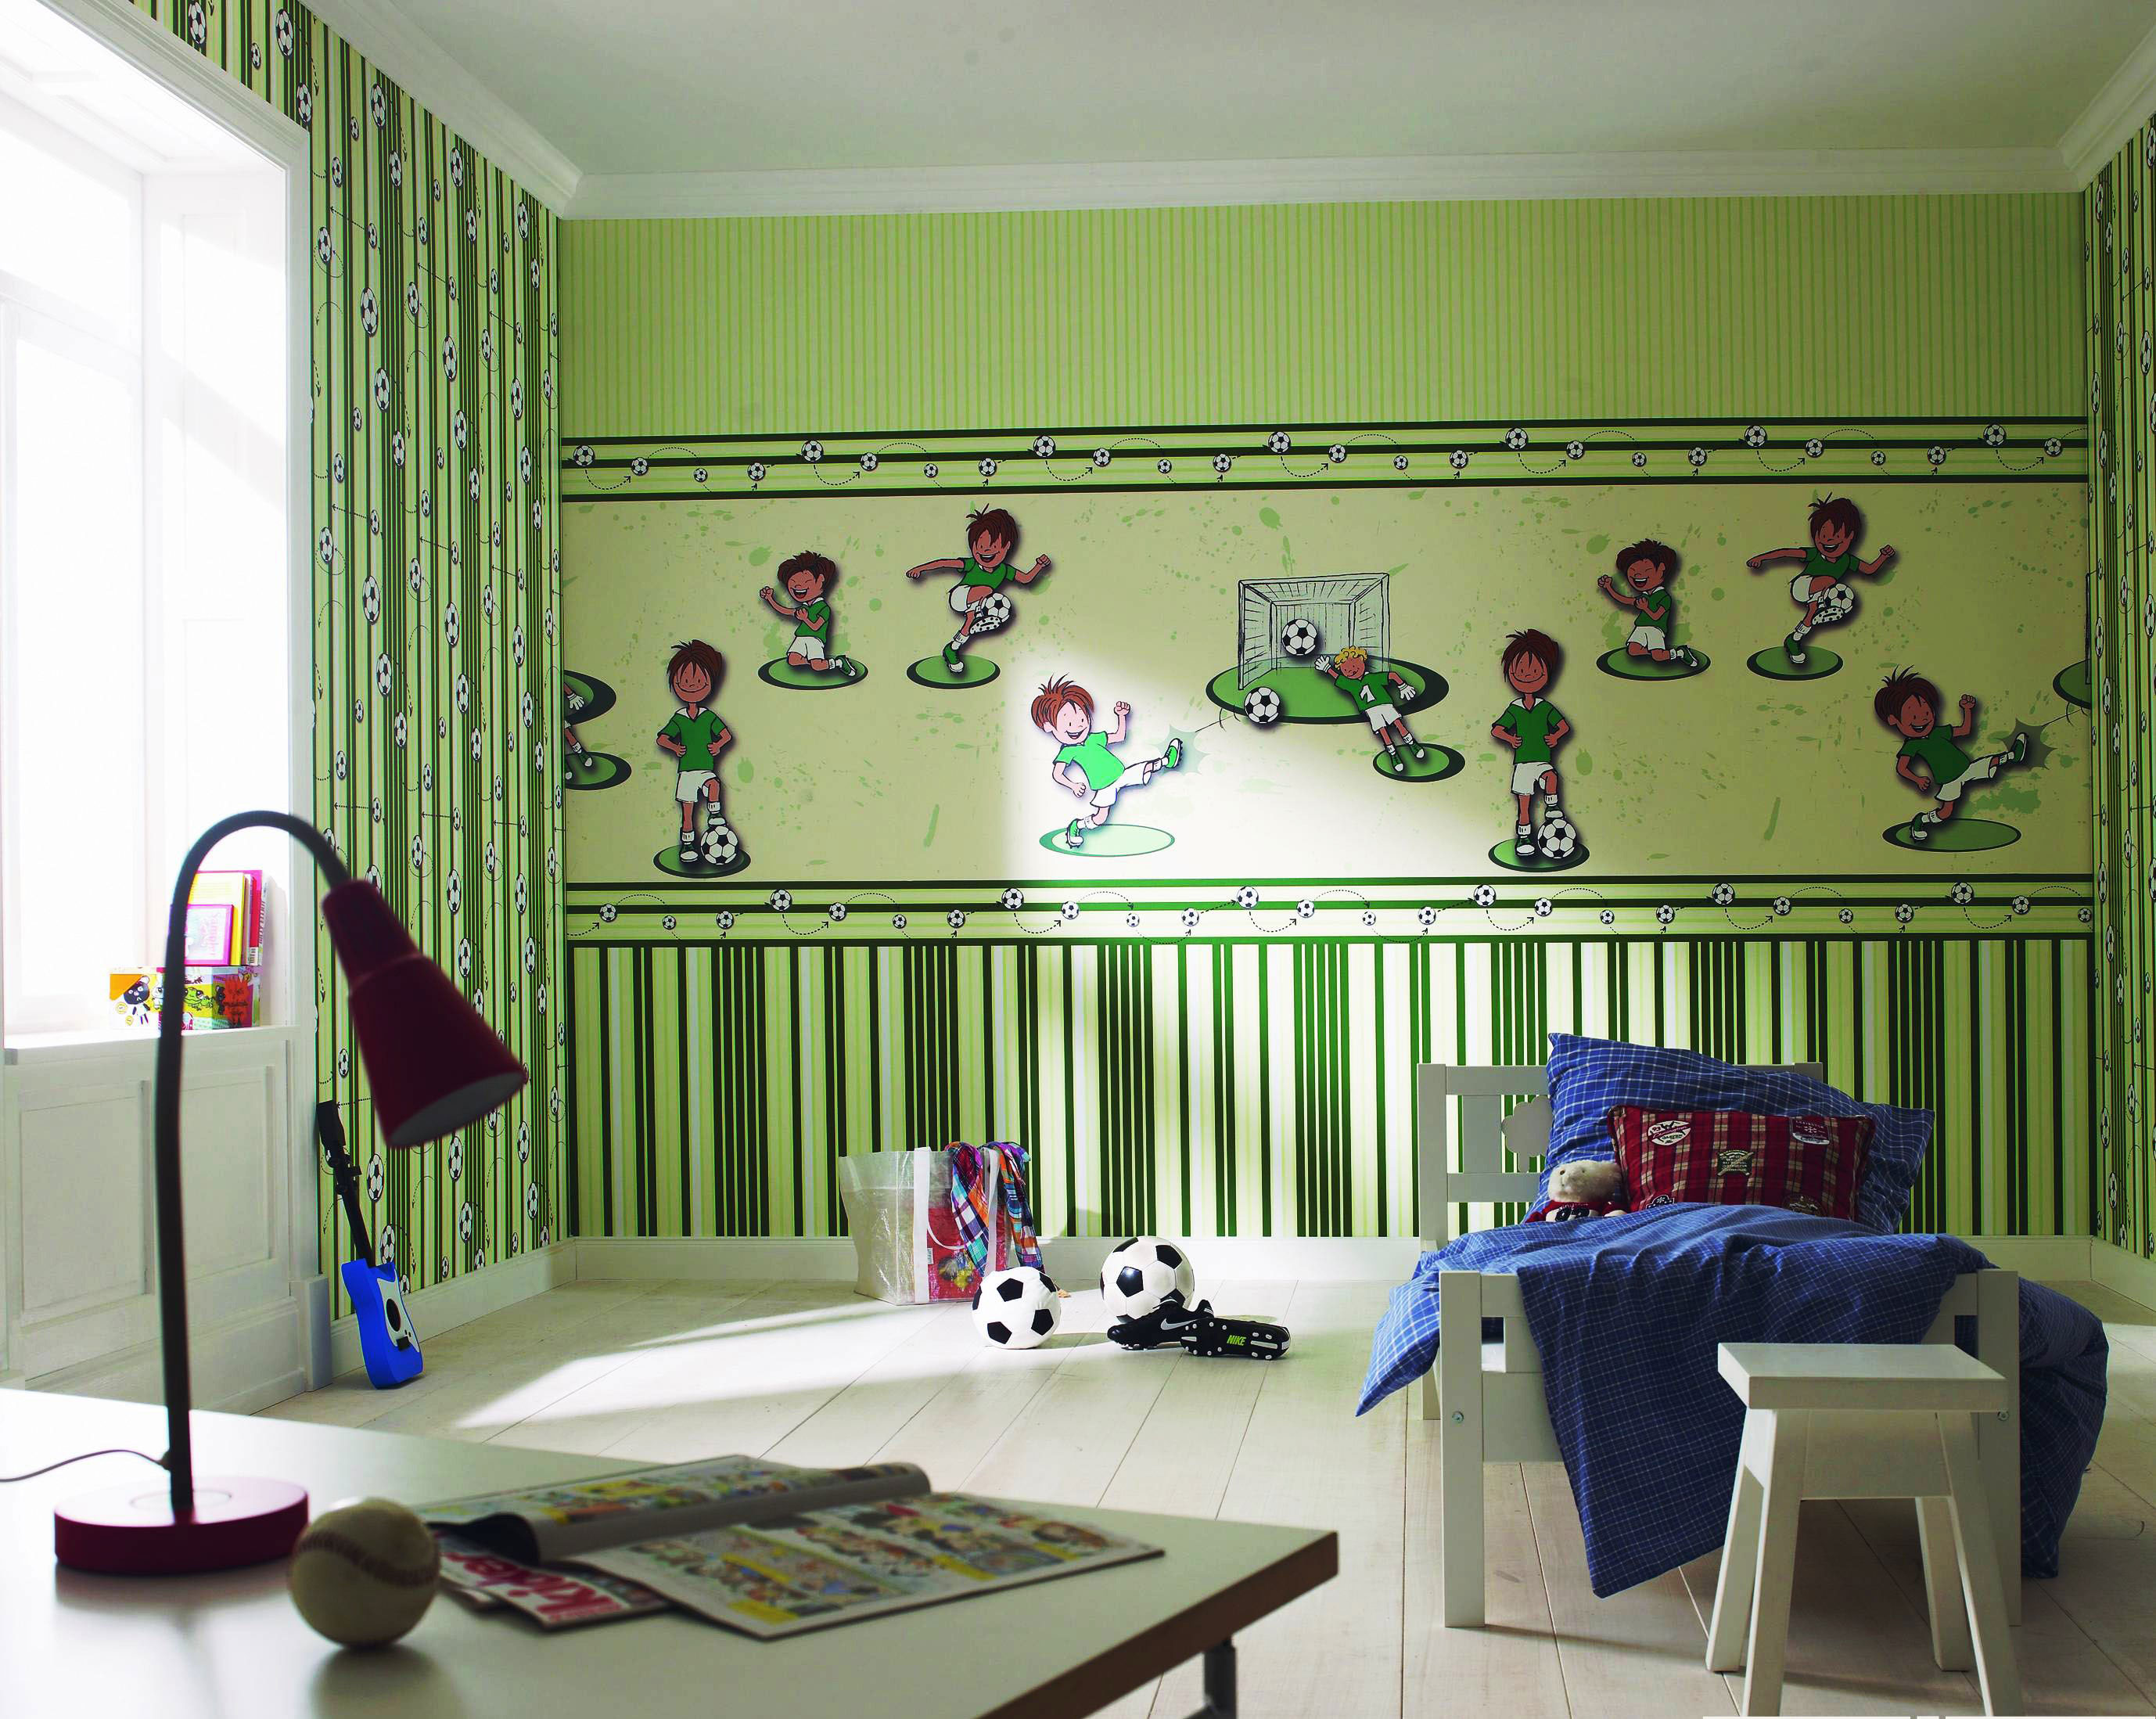 Wallpaper for a nursery for a little boy